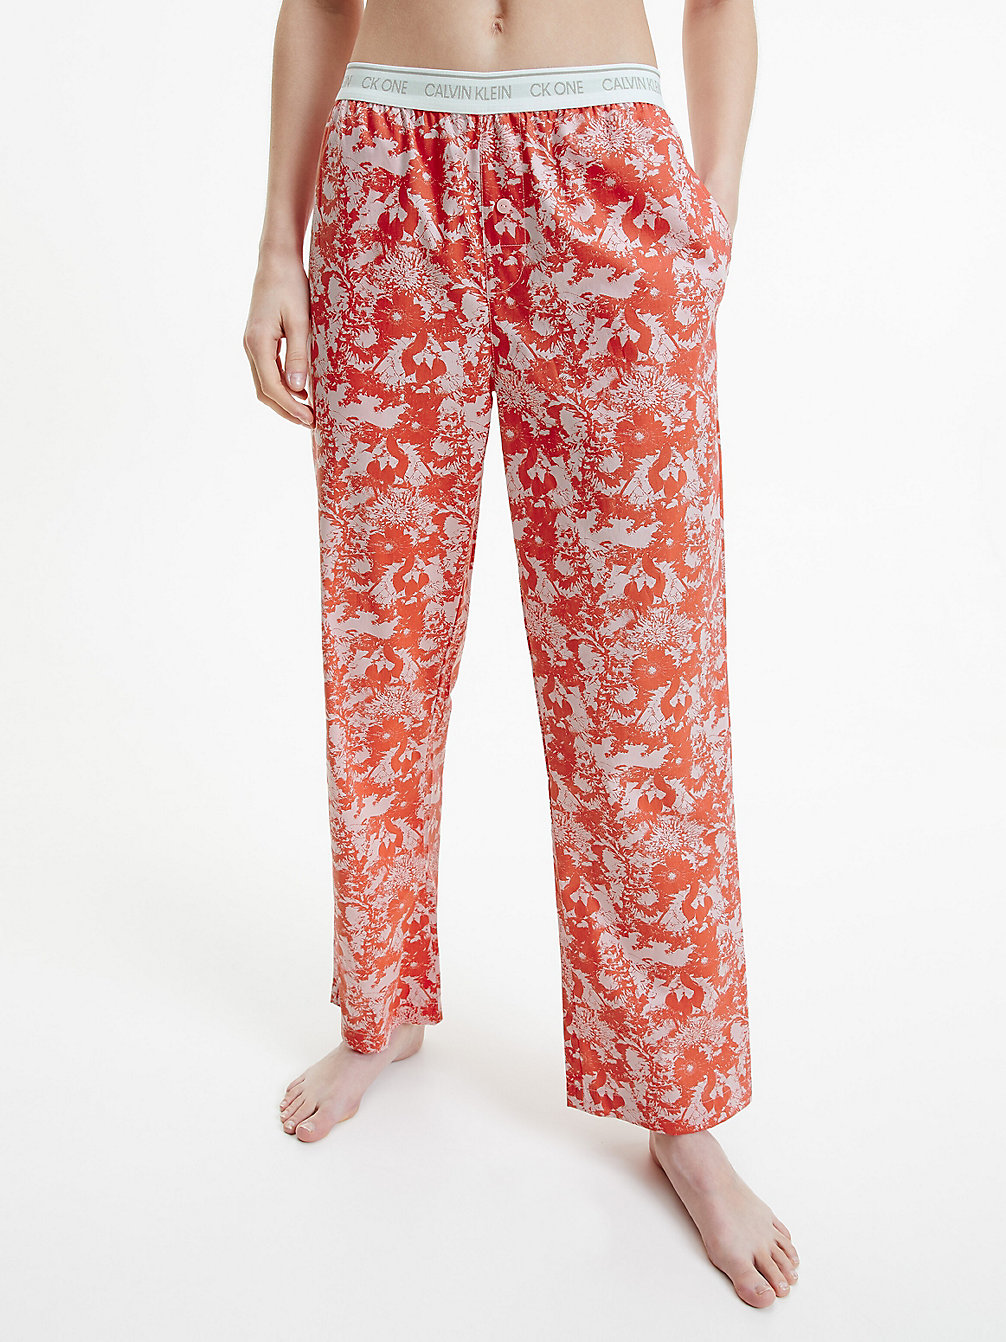 SOLAR FLORAL PRINT_PINK SHELL > Пижамные штаны - CK One > undefined Женщины - Calvin Klein